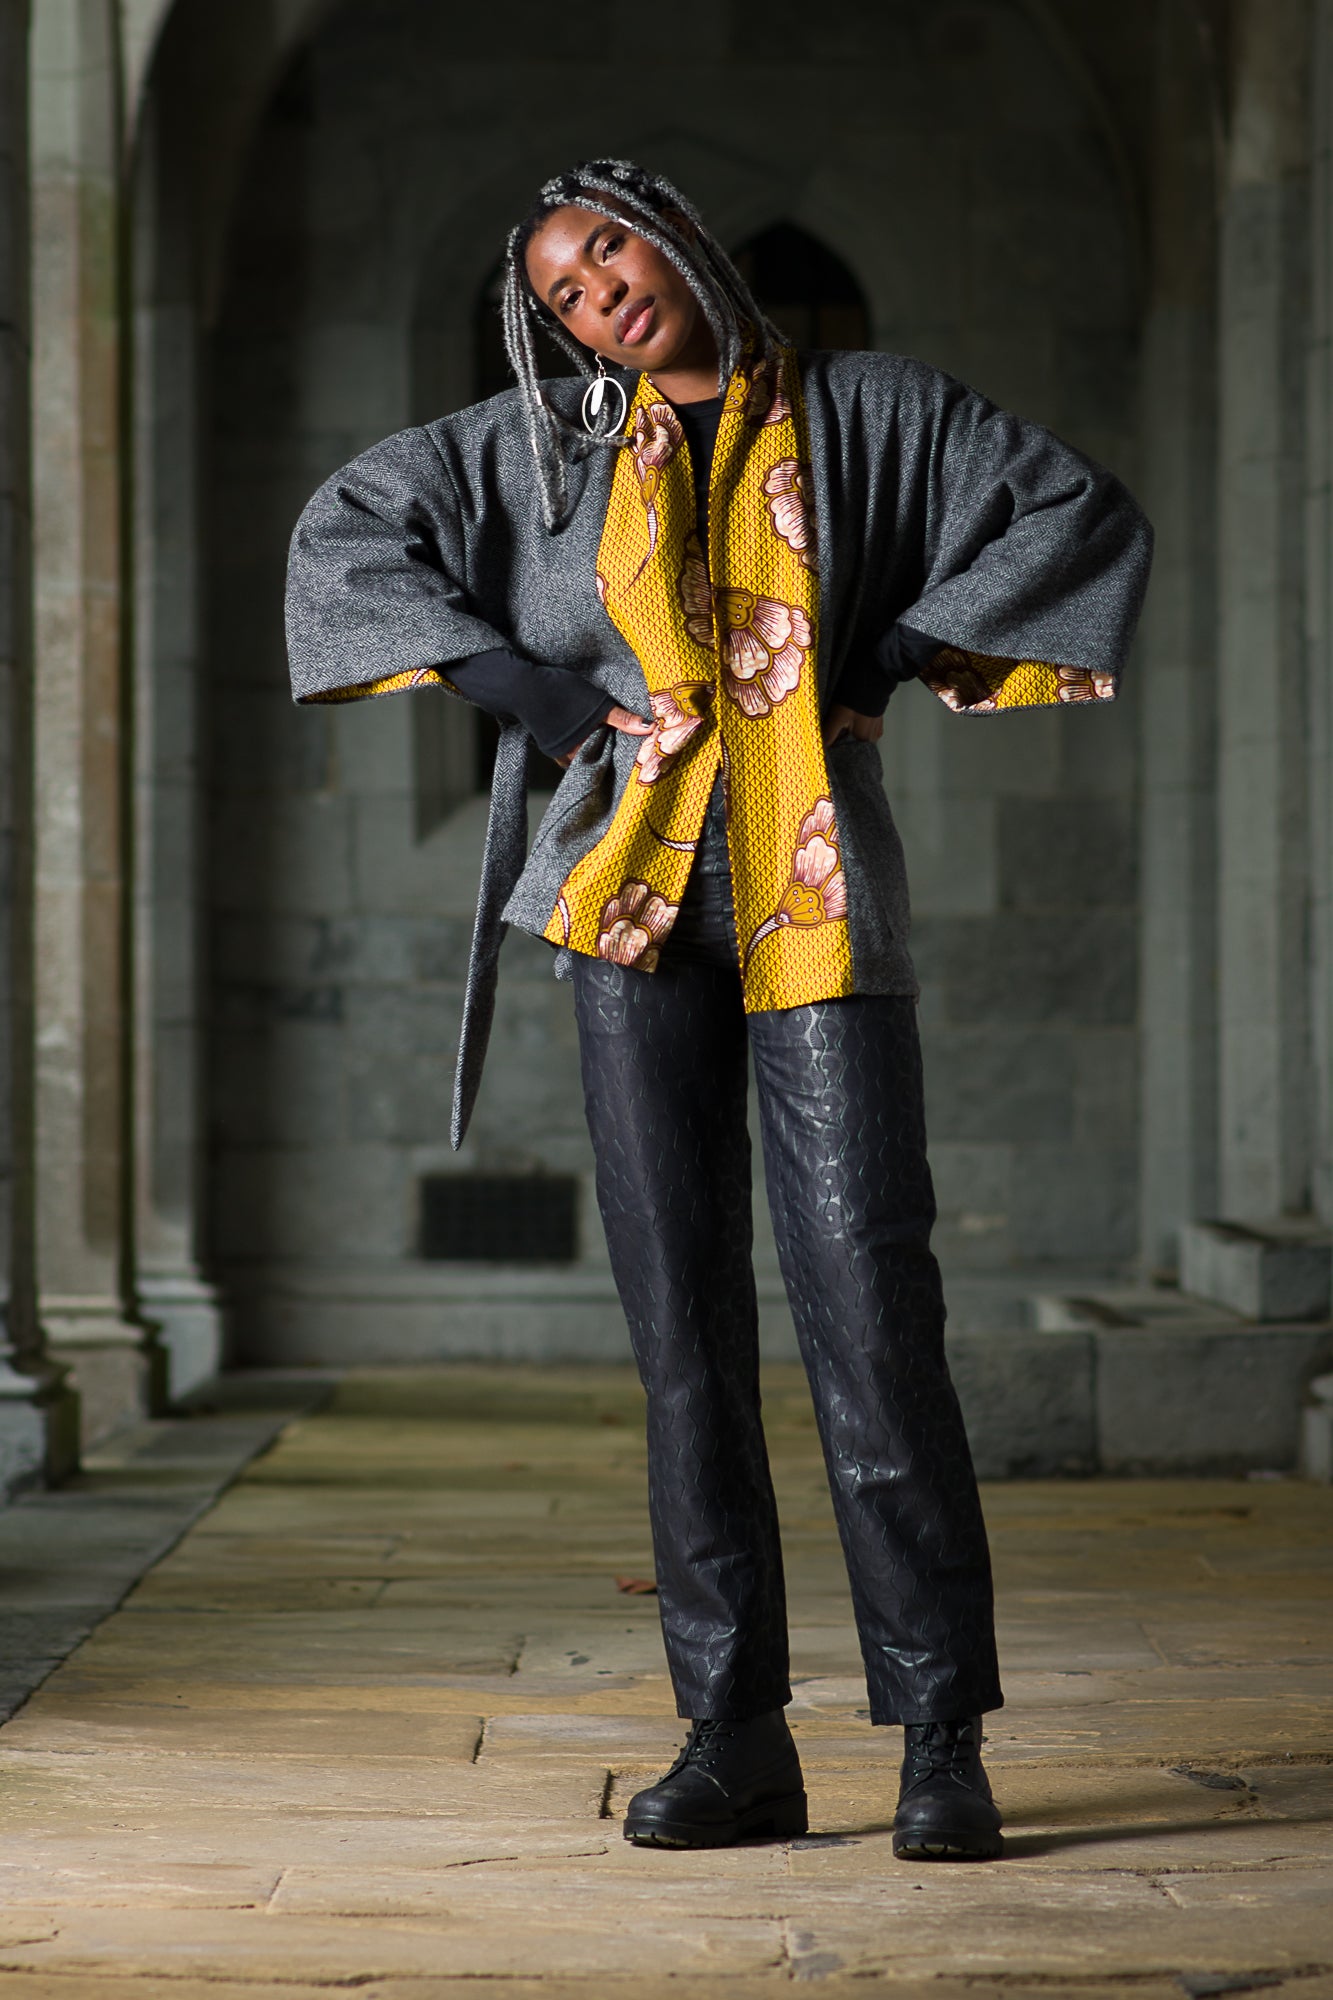 Art Symphony: The Kimono Jacket